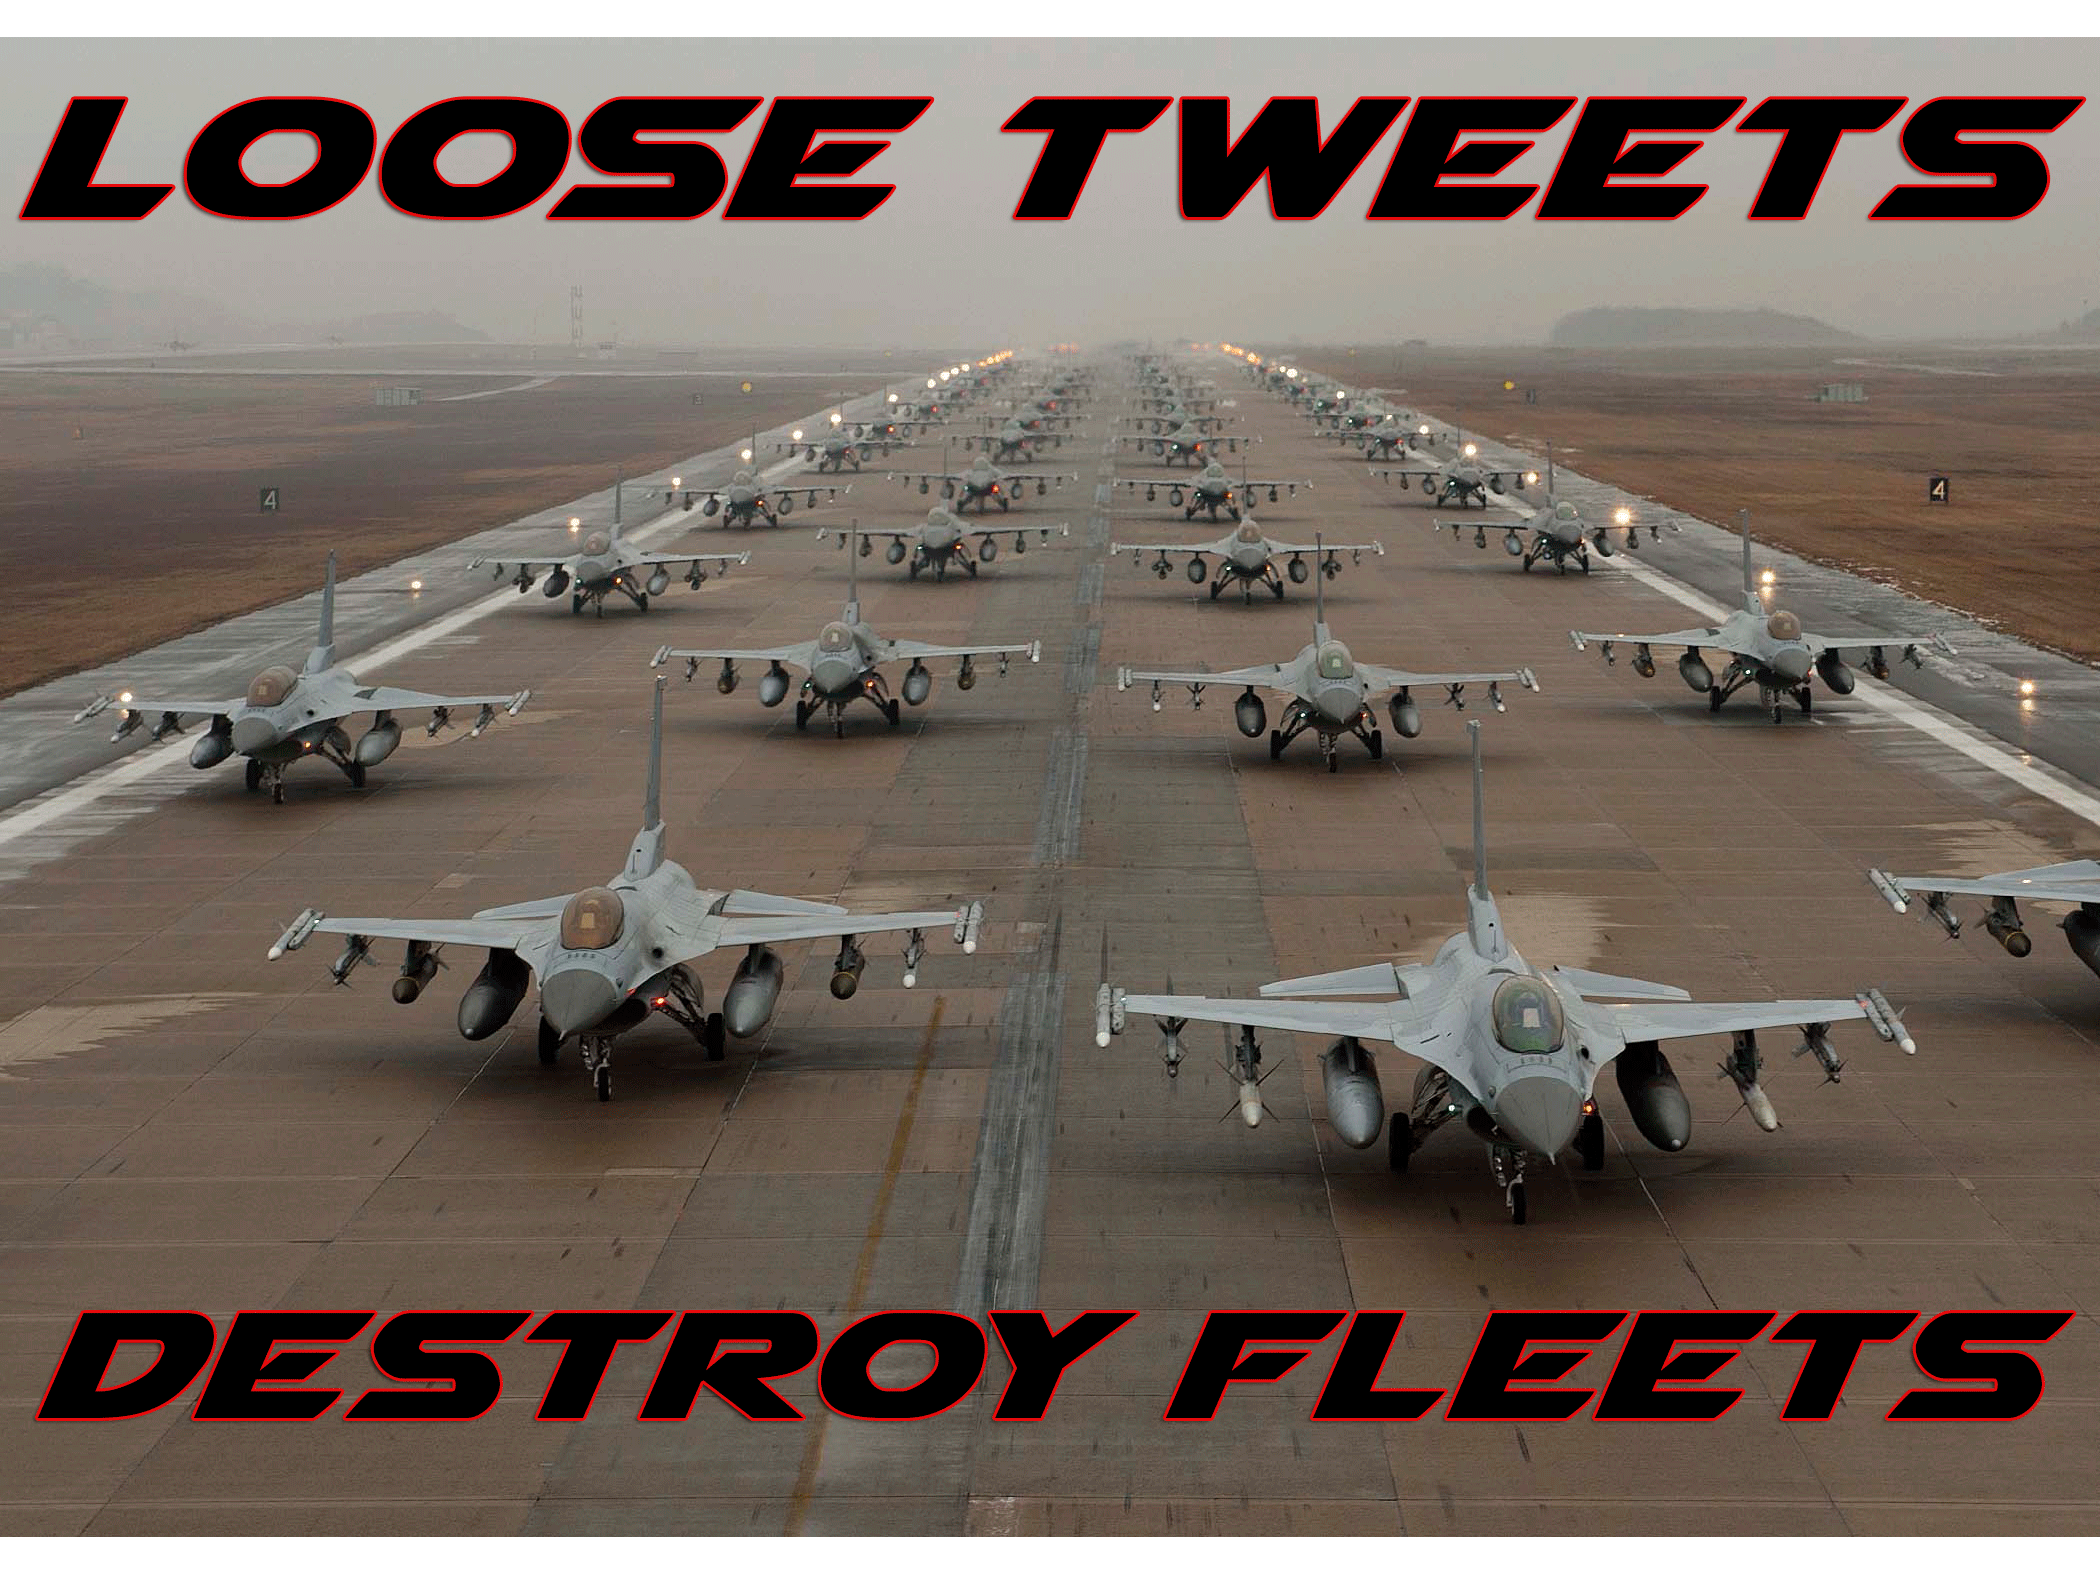 'Lose tweets destroy tweets': US Army warnings about Twitter